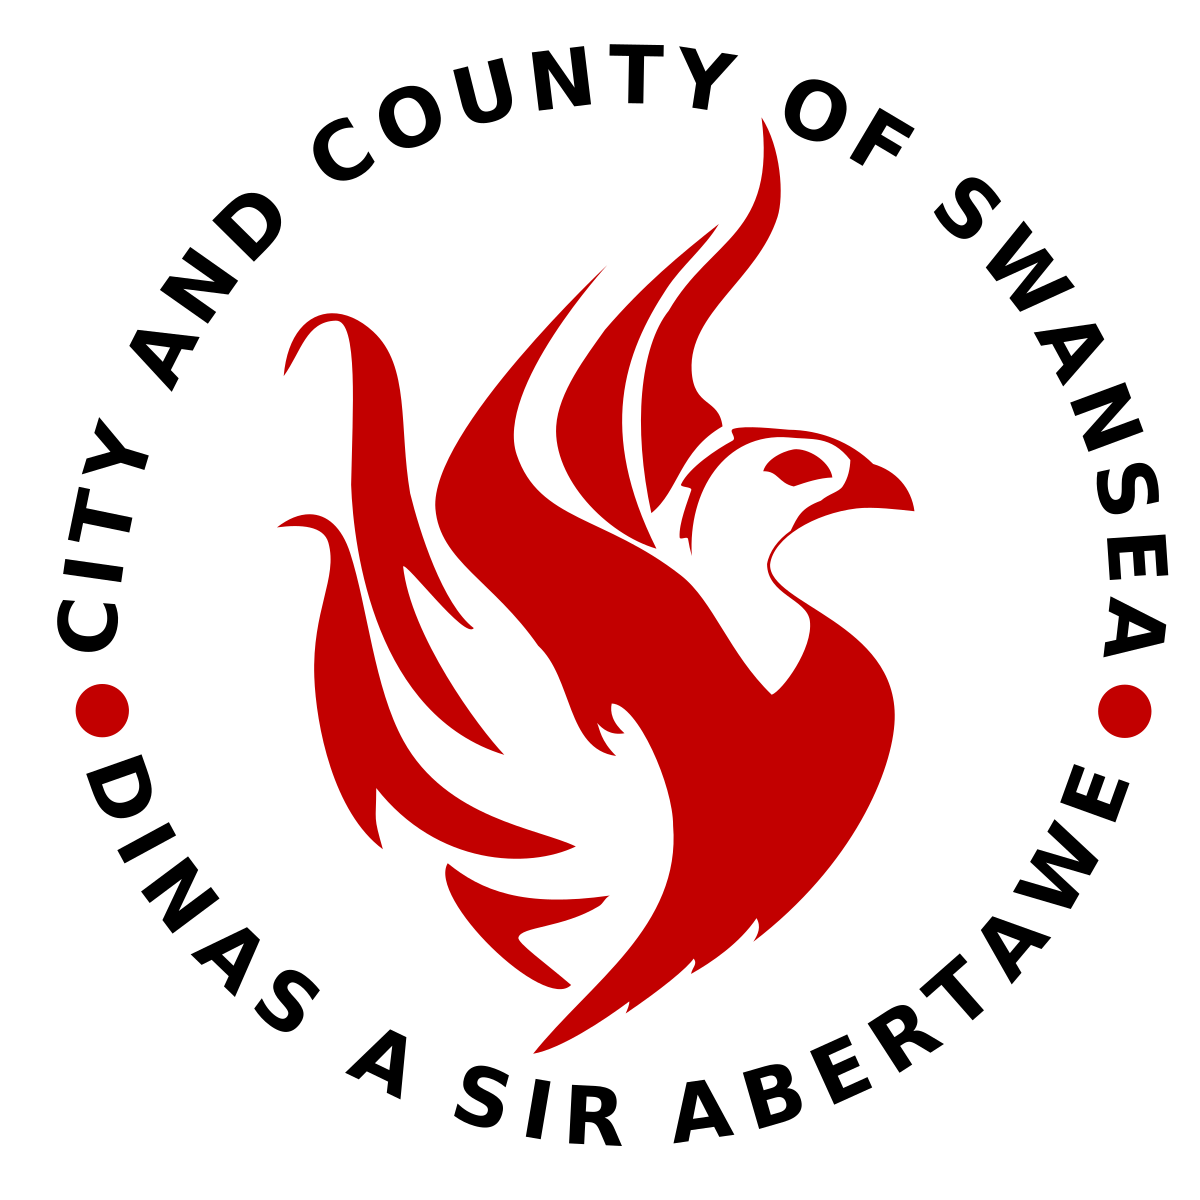 Council logo / logo y cyngor